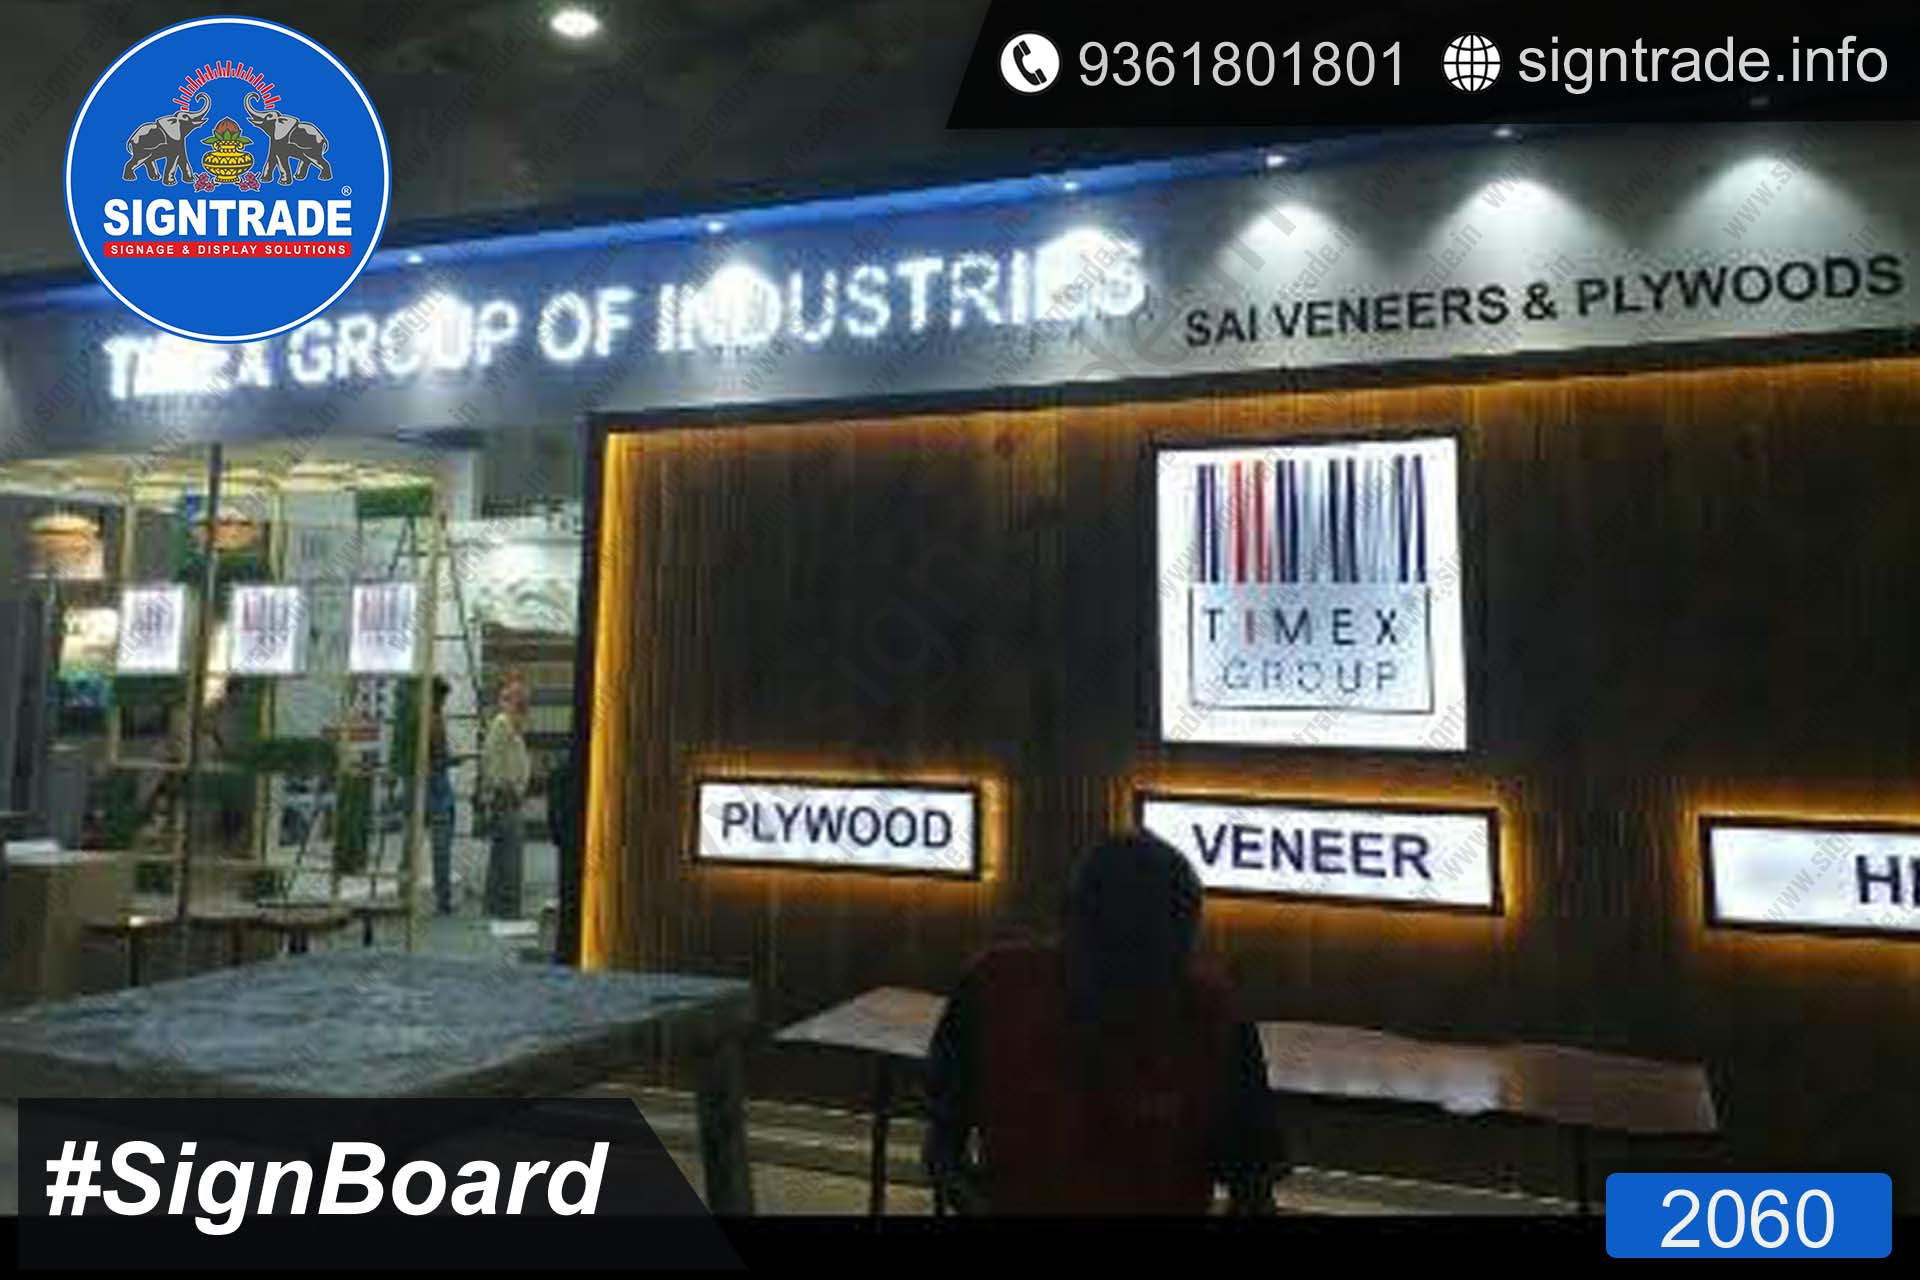 Sai Veneers and Plywoods Signboard